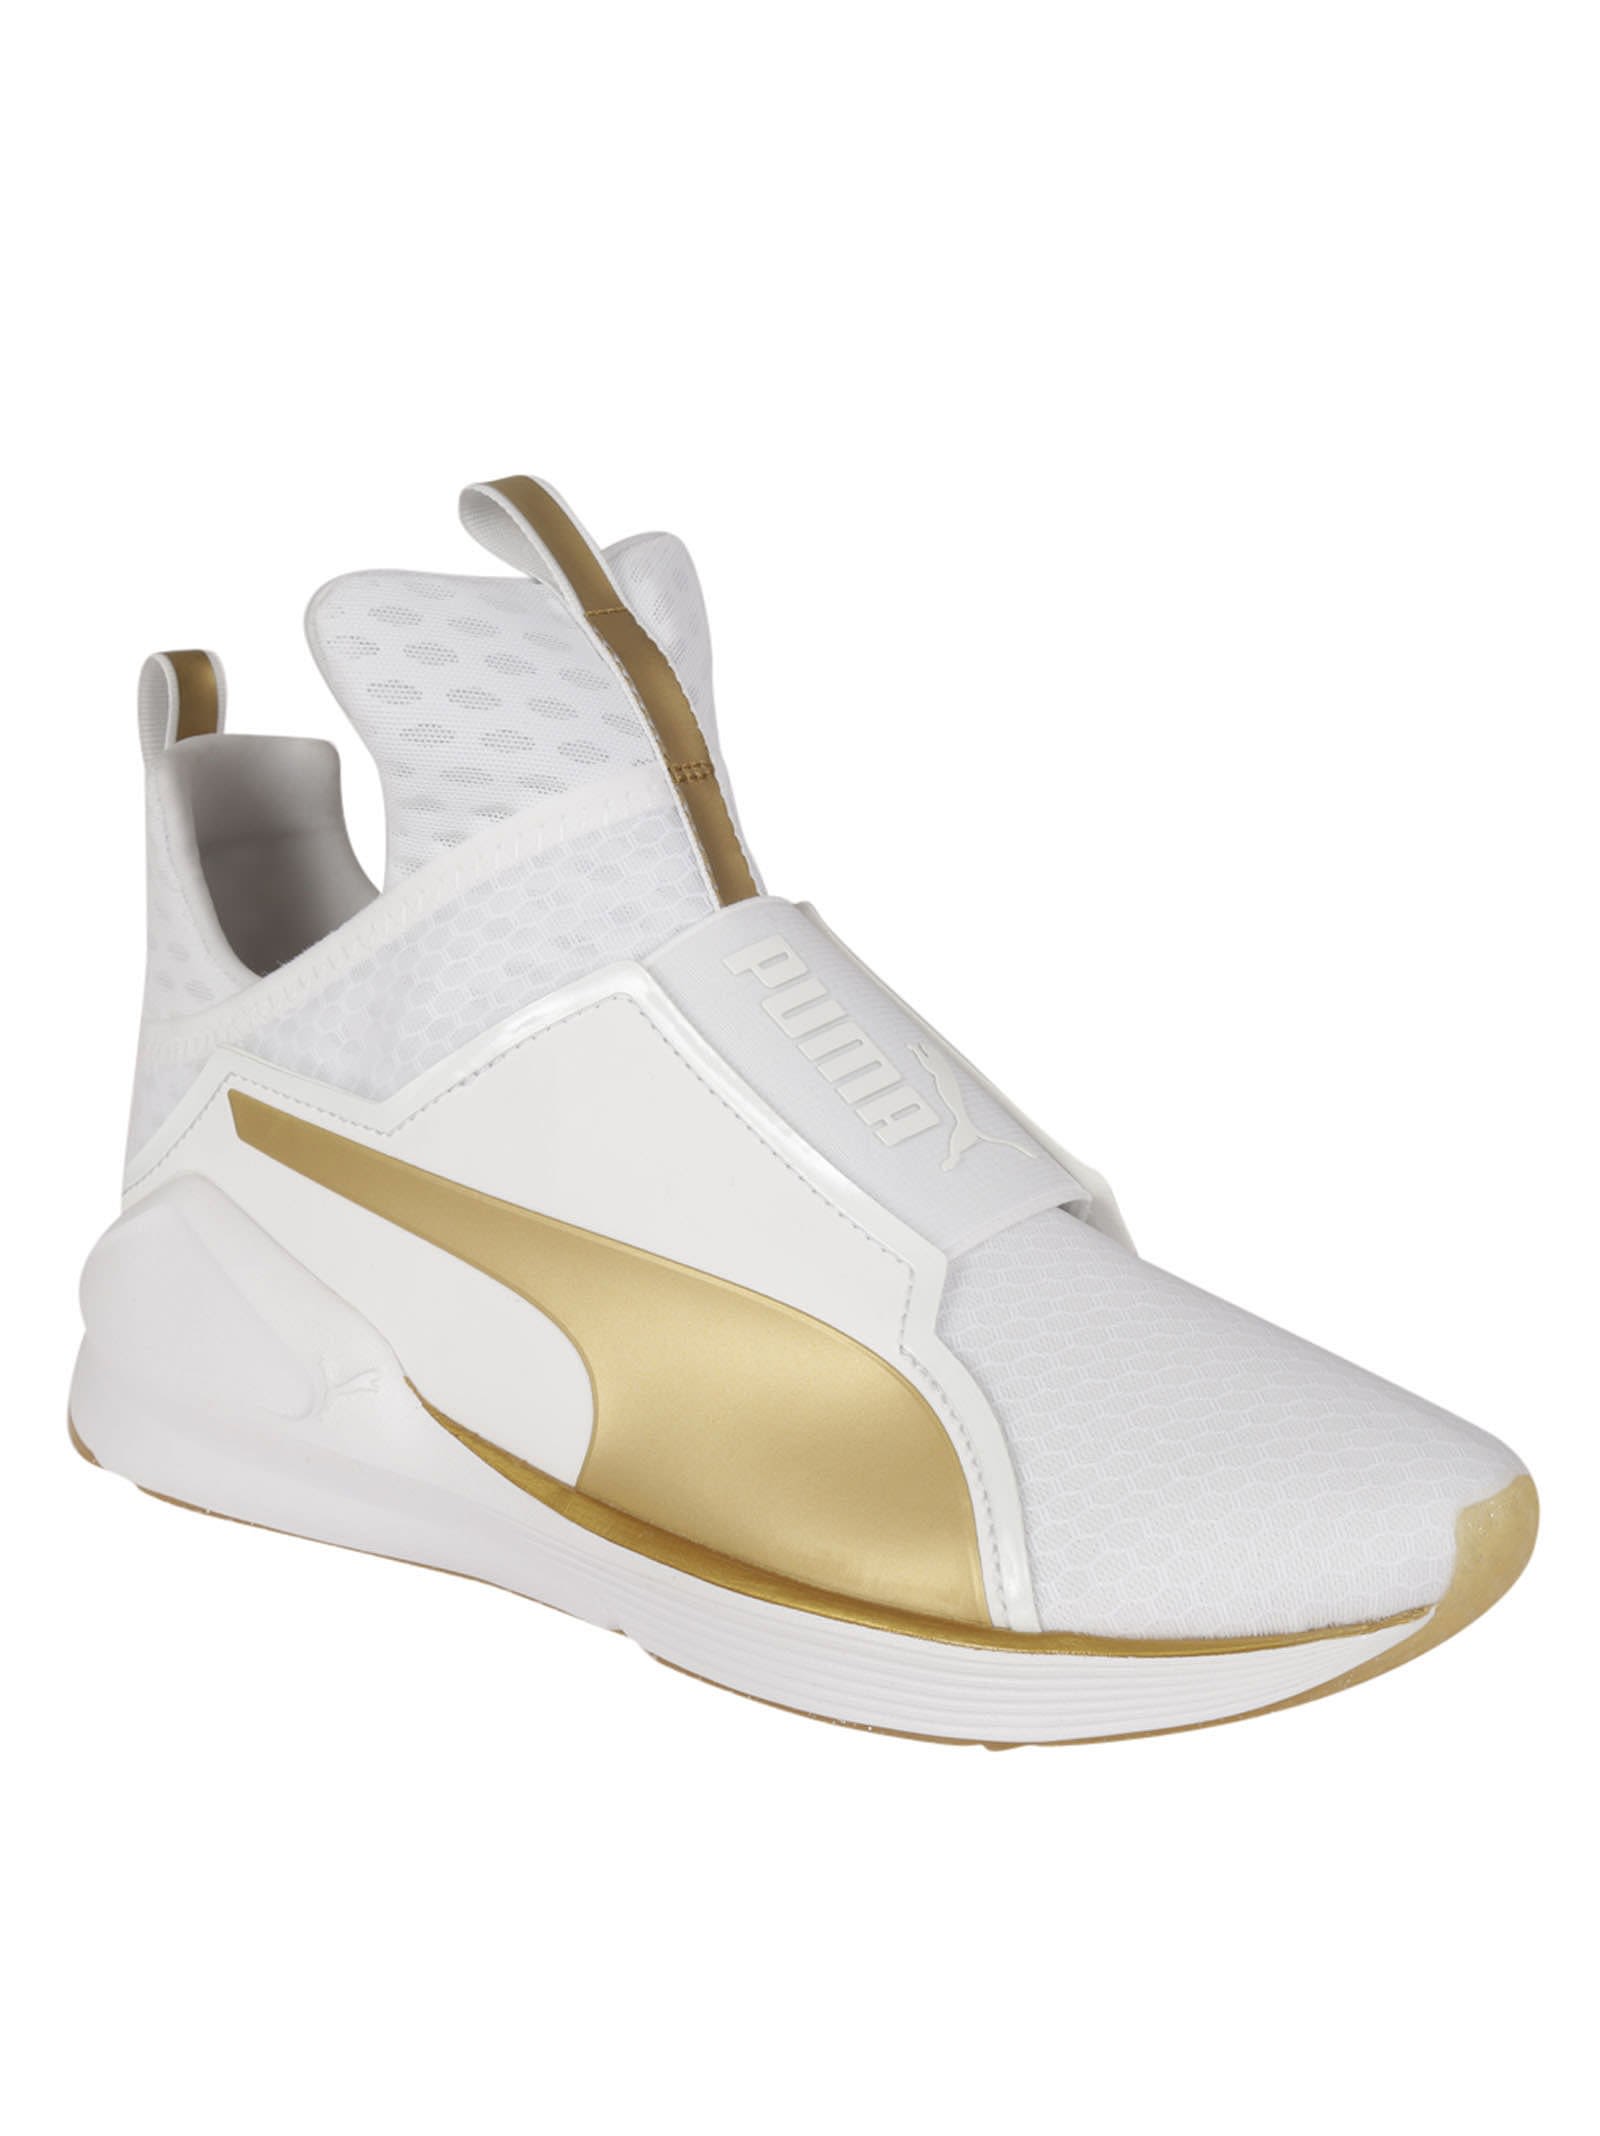 Puma - Puma White And Gold Fierce Sneakers - White, Women's Sneakers ...